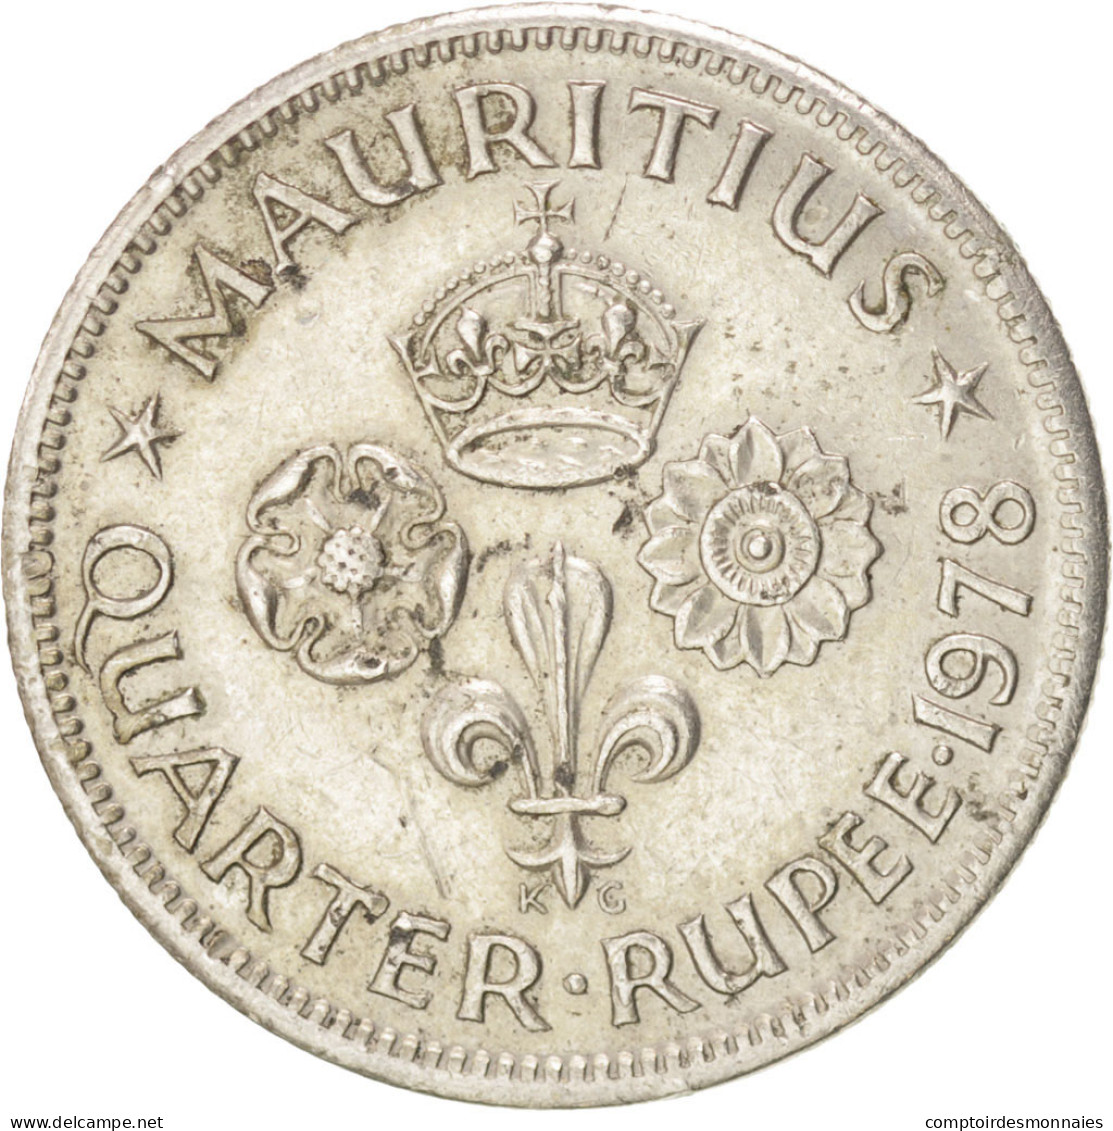 Monnaie, Mauritius, Elizabeth II, 1/4 Rupee, 1978, TTB, Copper-nickel, KM:36 - Maurice